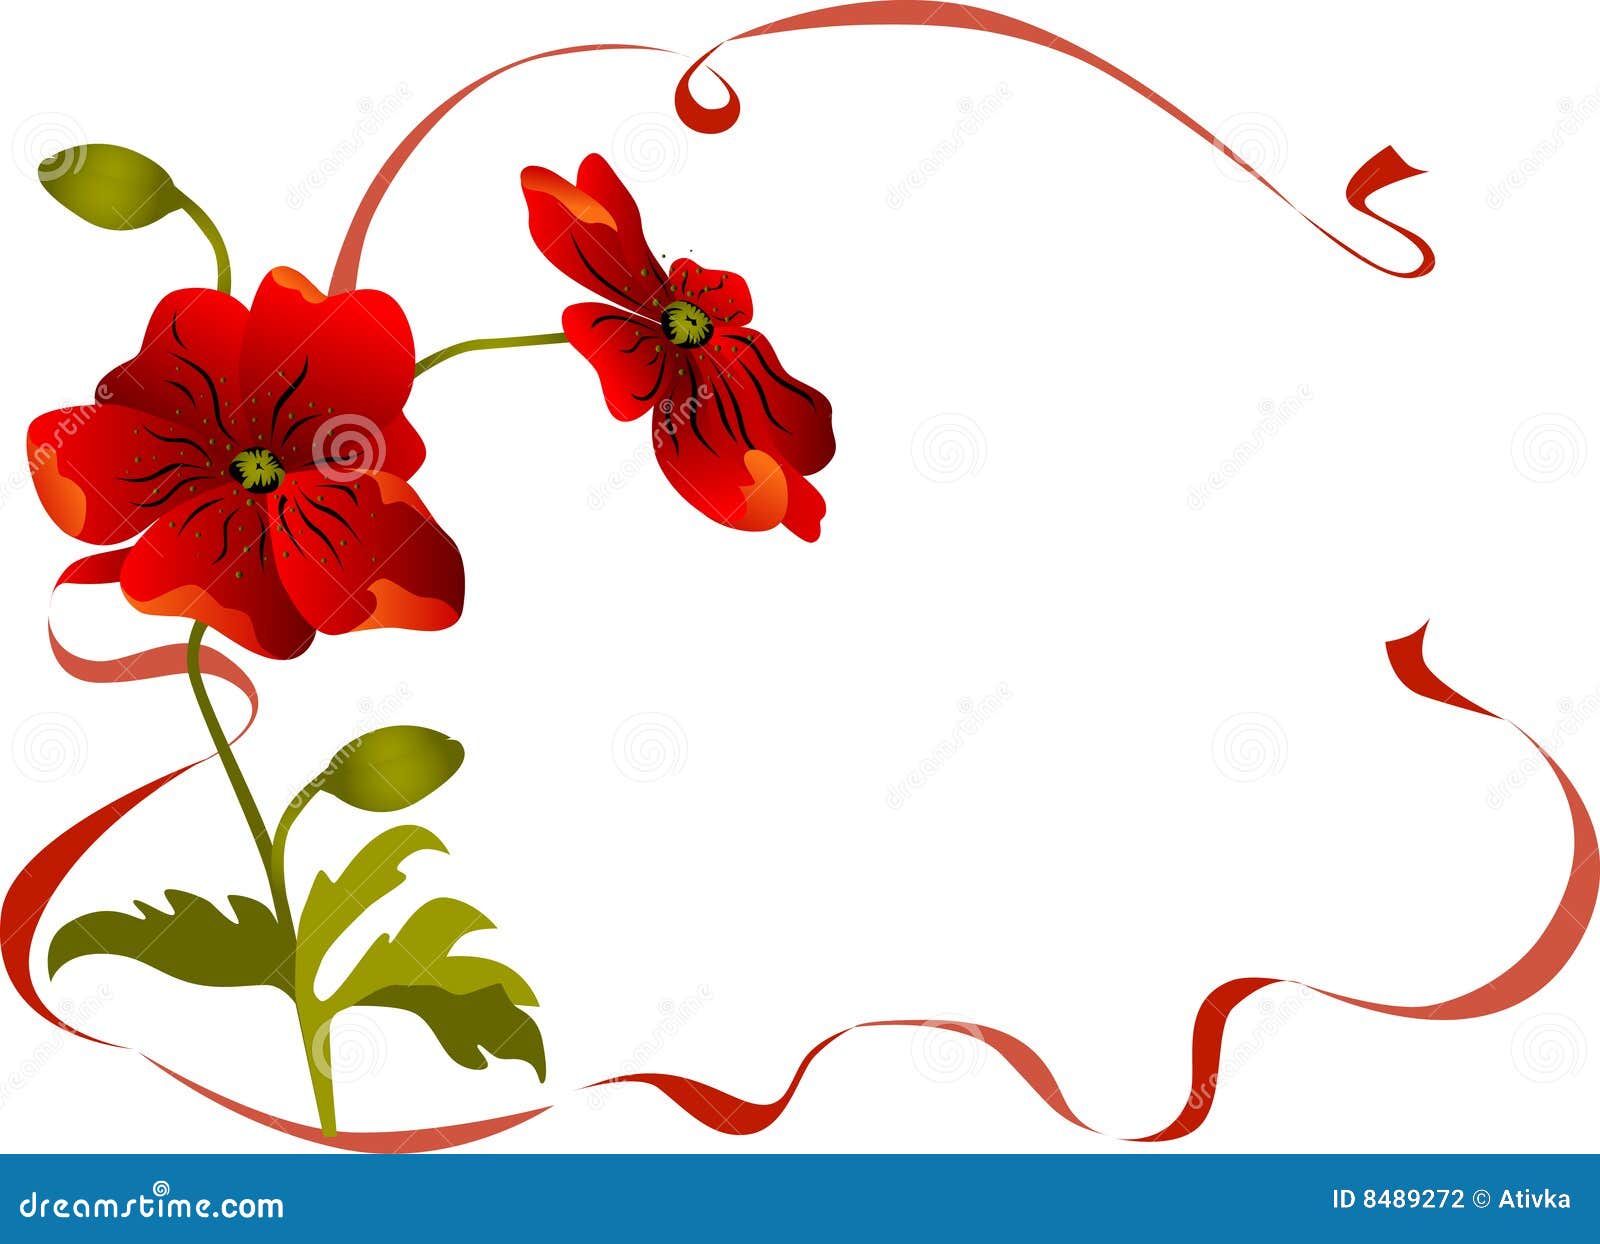 Vintage Poppy Flower Wallpaper Stock Vector - Illustration of drawing,  spring: 8489272